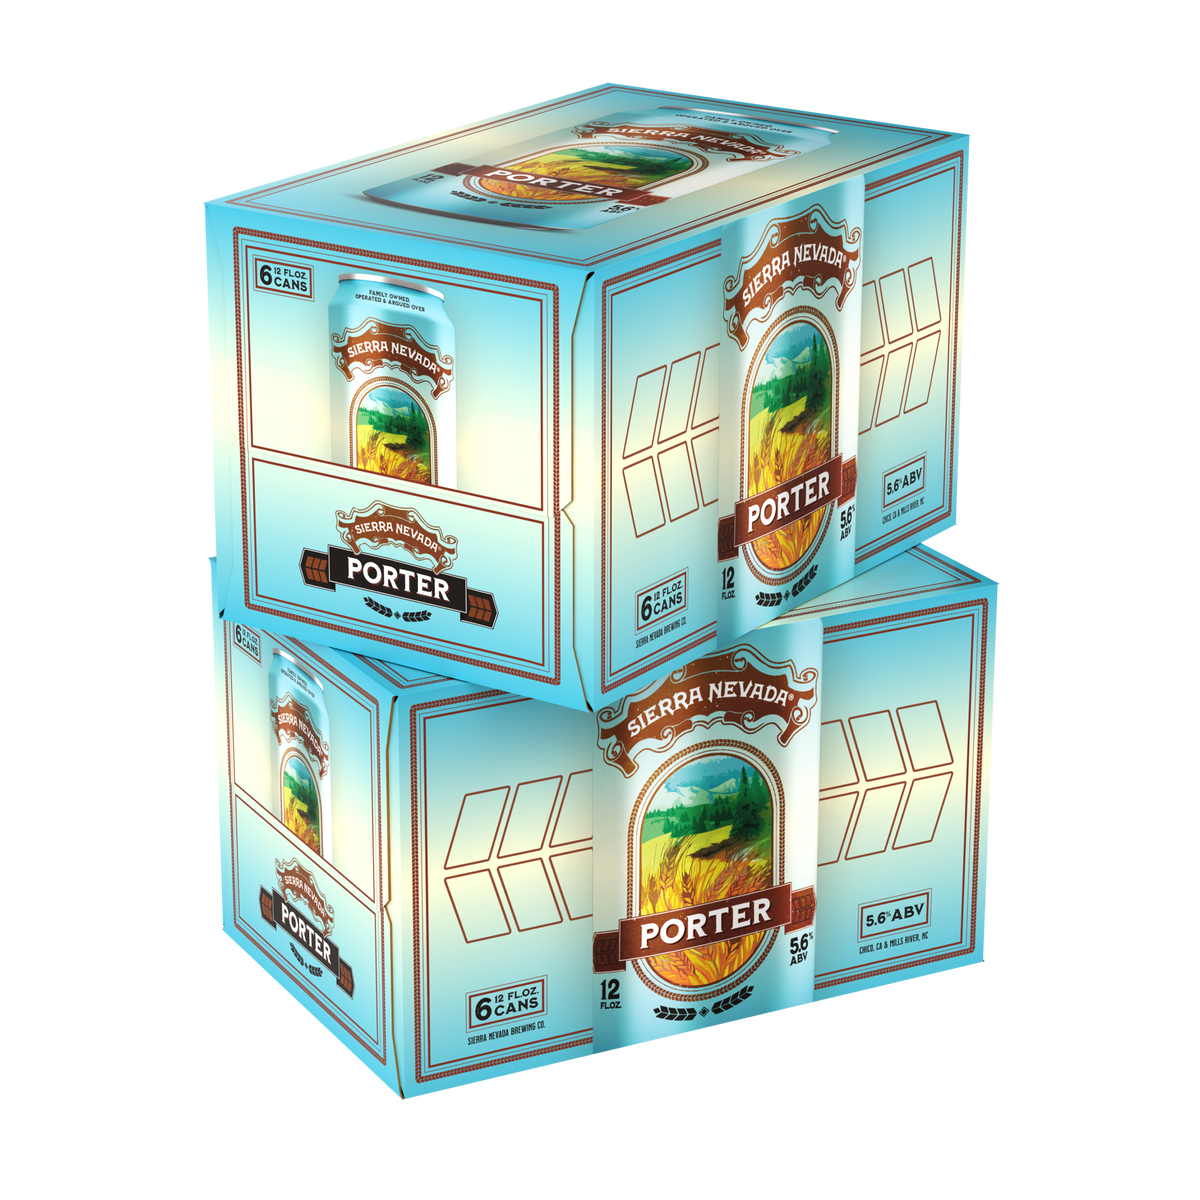 Sierra Nevada Porter 12-pack 12-ounce cans